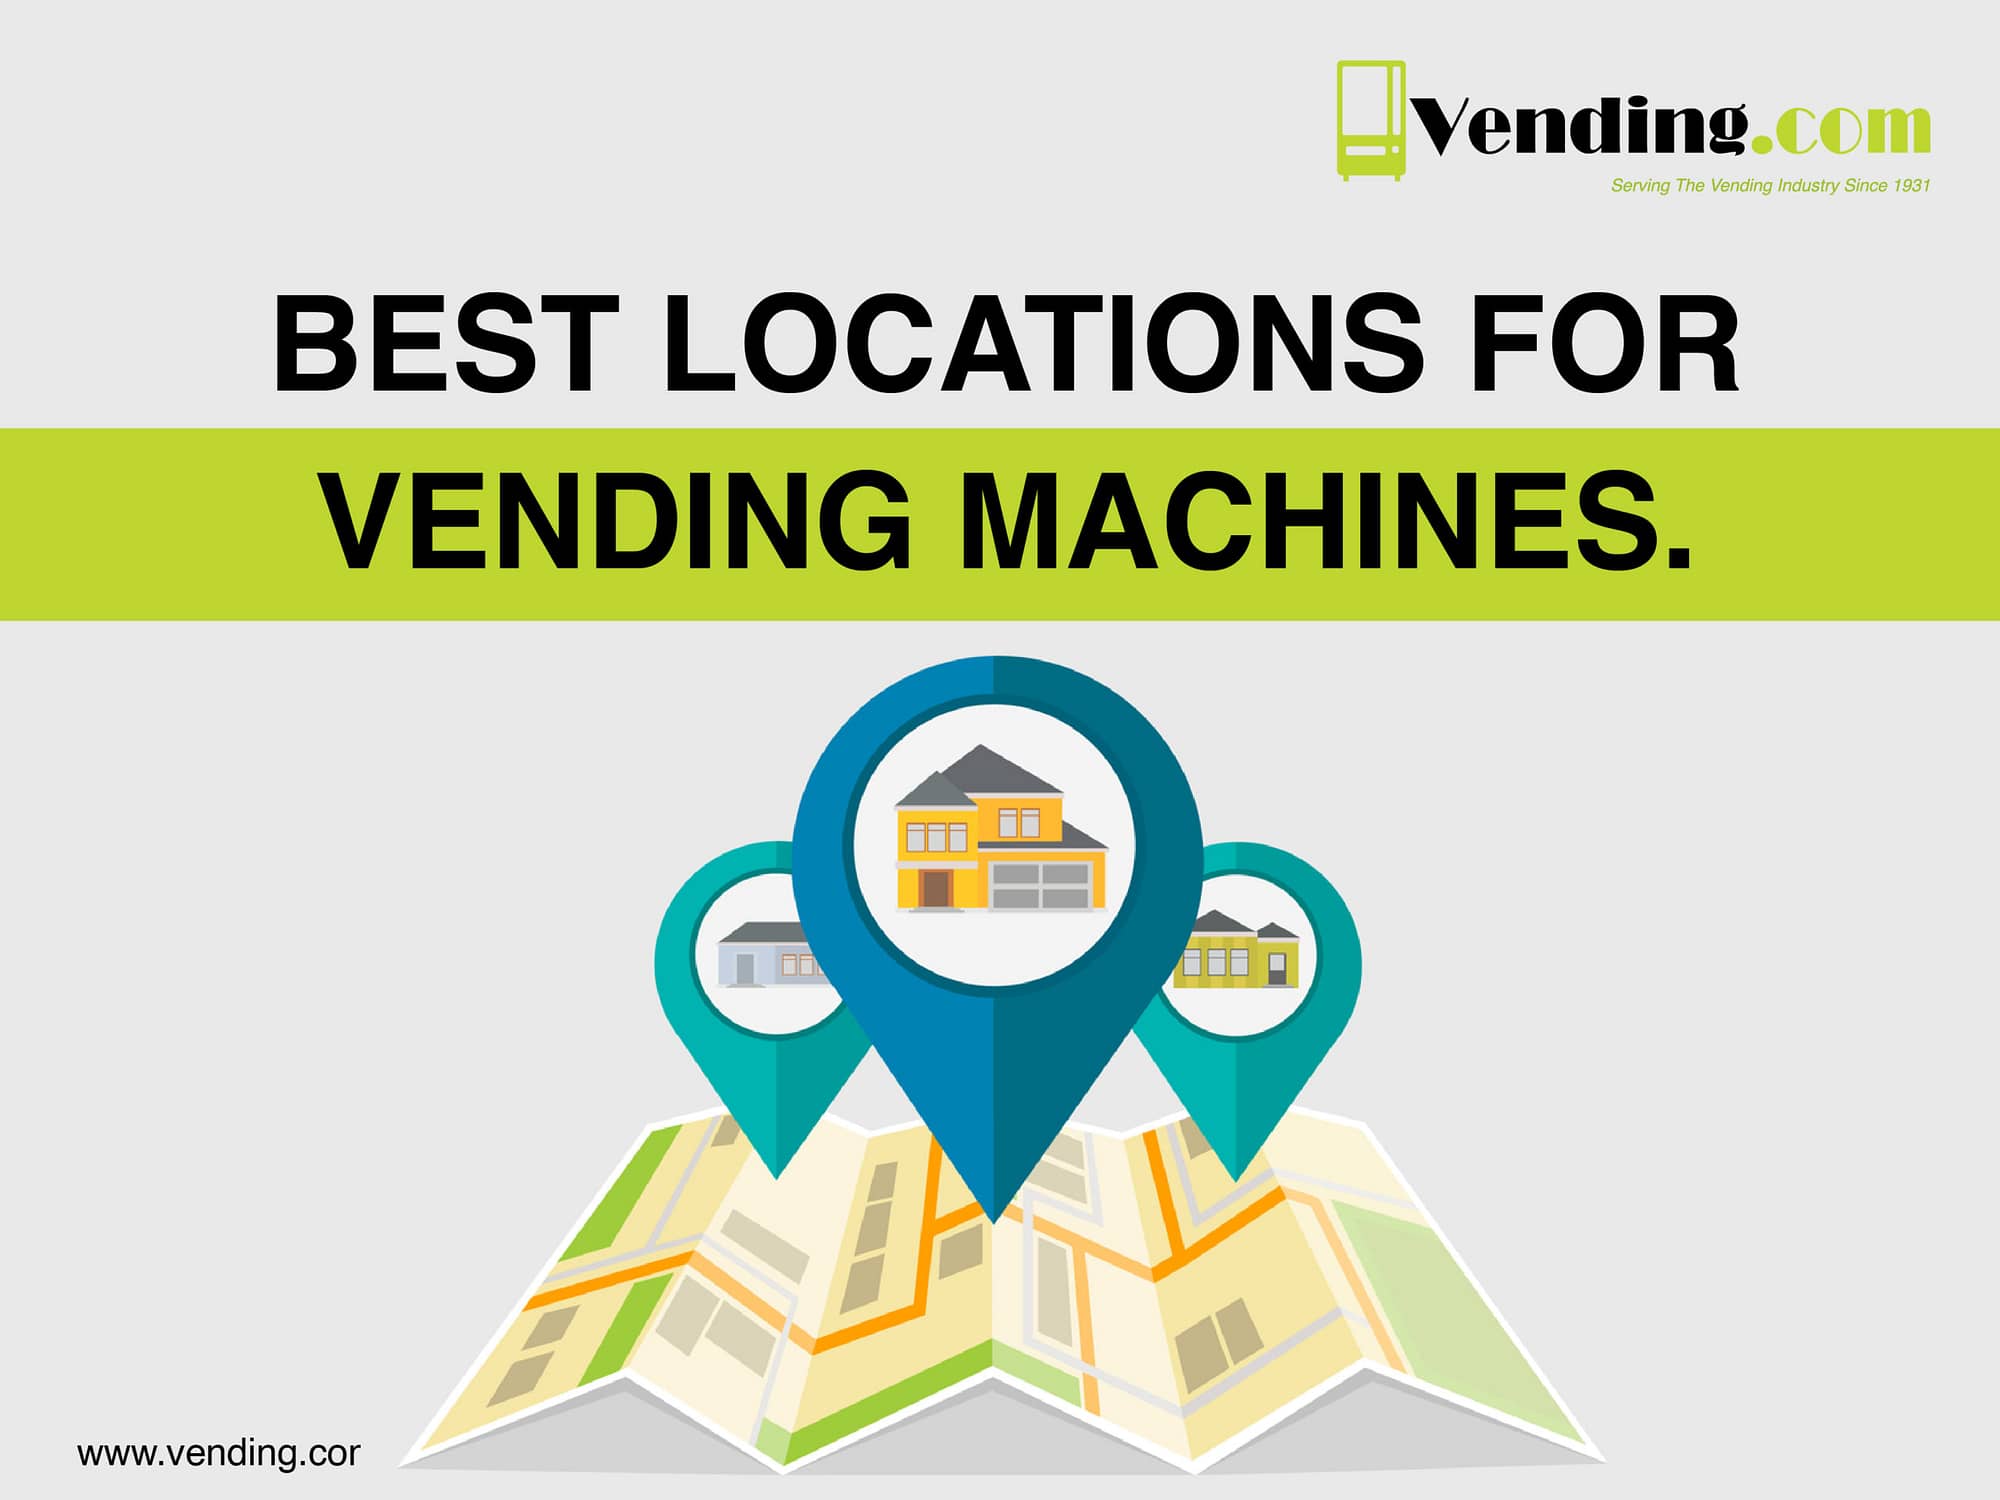 Vending.com - The Best Locations for Vending Machines